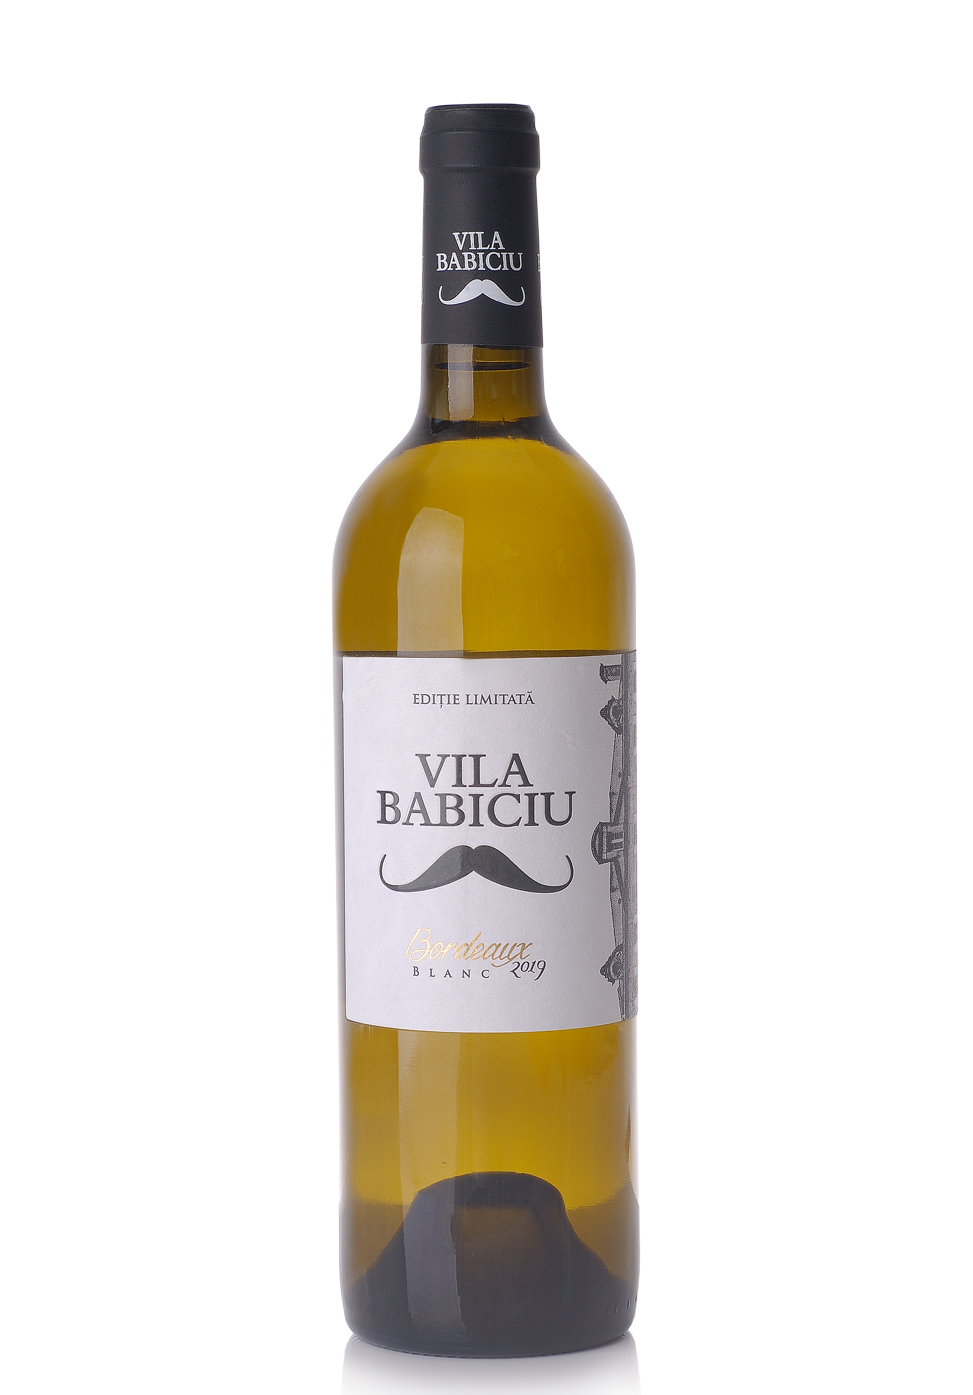 Vin Vila Babiciu Bordeaux Blanc 2019, Editie limitata (0.75L)